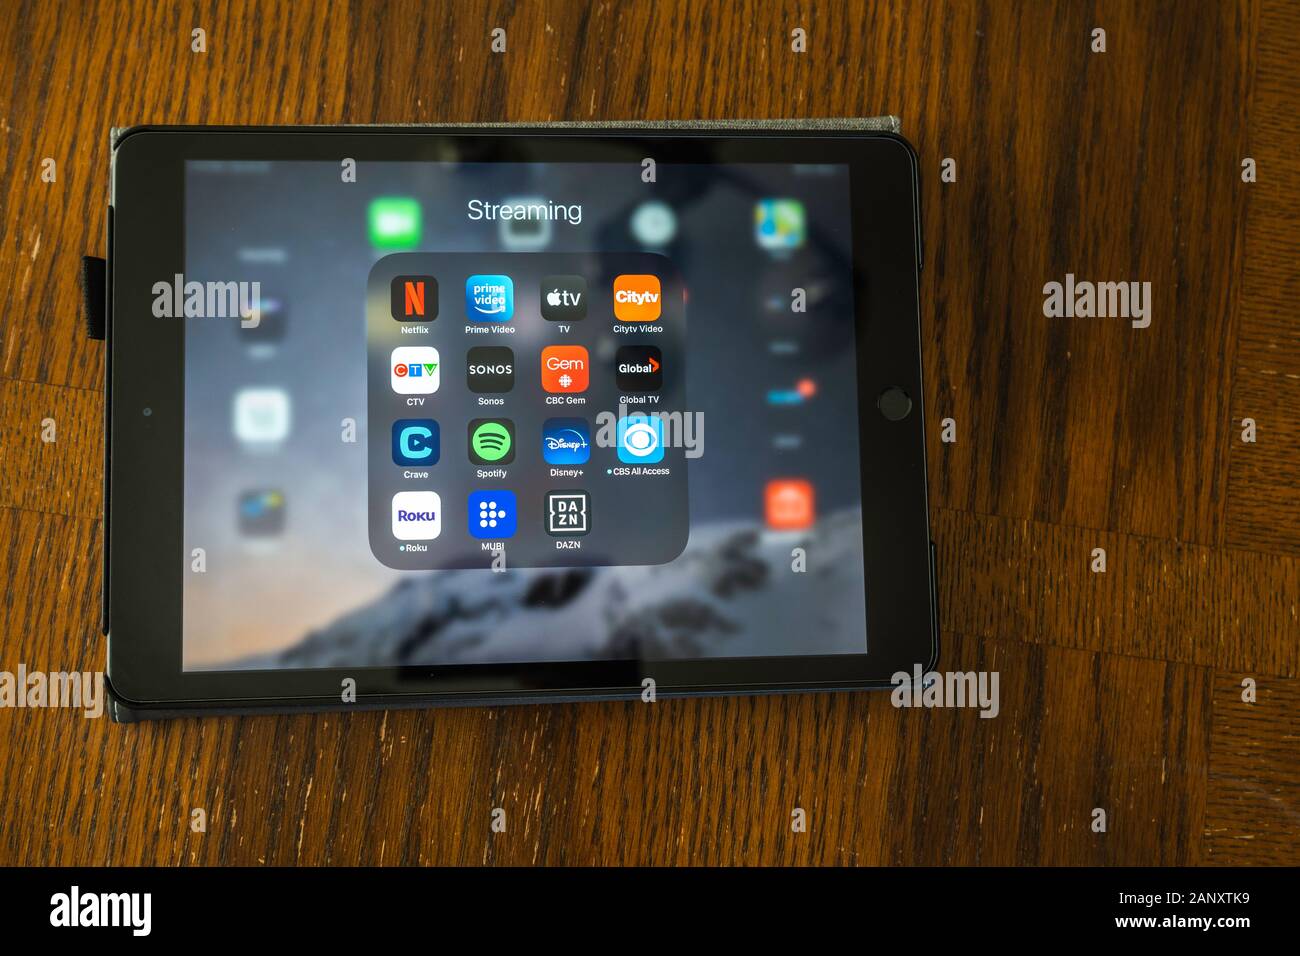 January 18 2020 - Calgary Alberta Canada - Ipad tablet with icons for various media streaming services Stock Photo